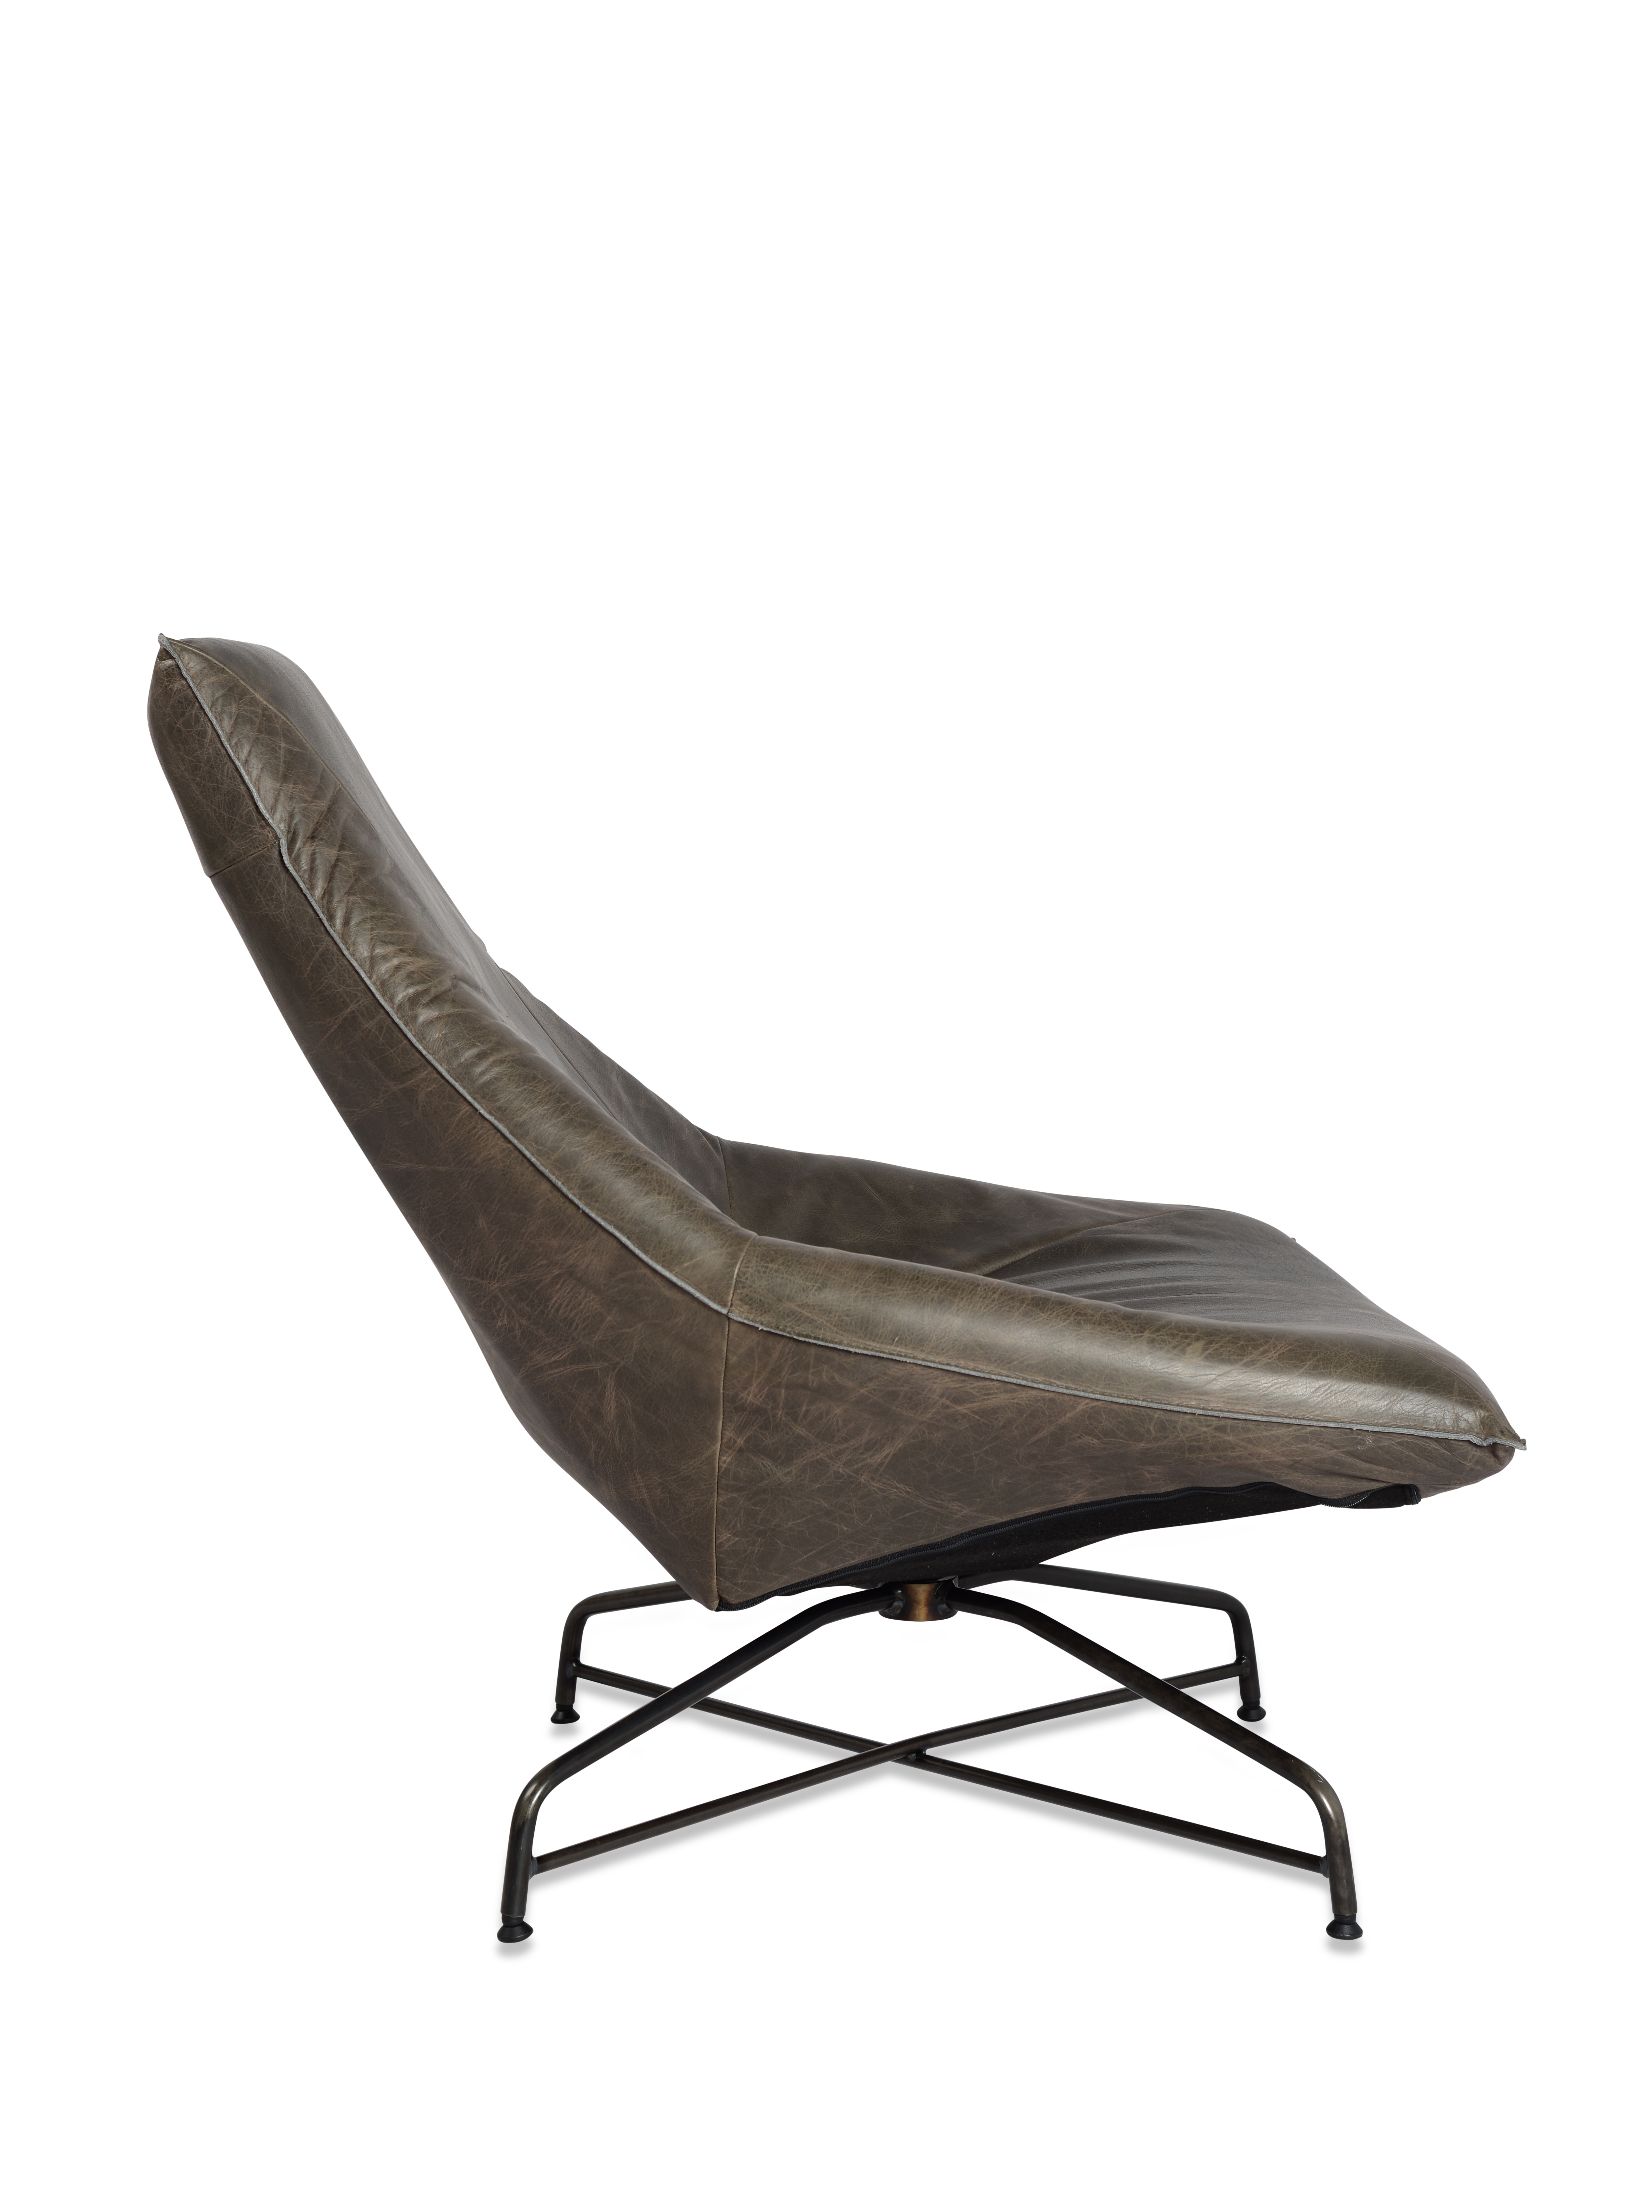 Beal Swivel Lounge Chair Bonanza Grey Old Glory Side (1)